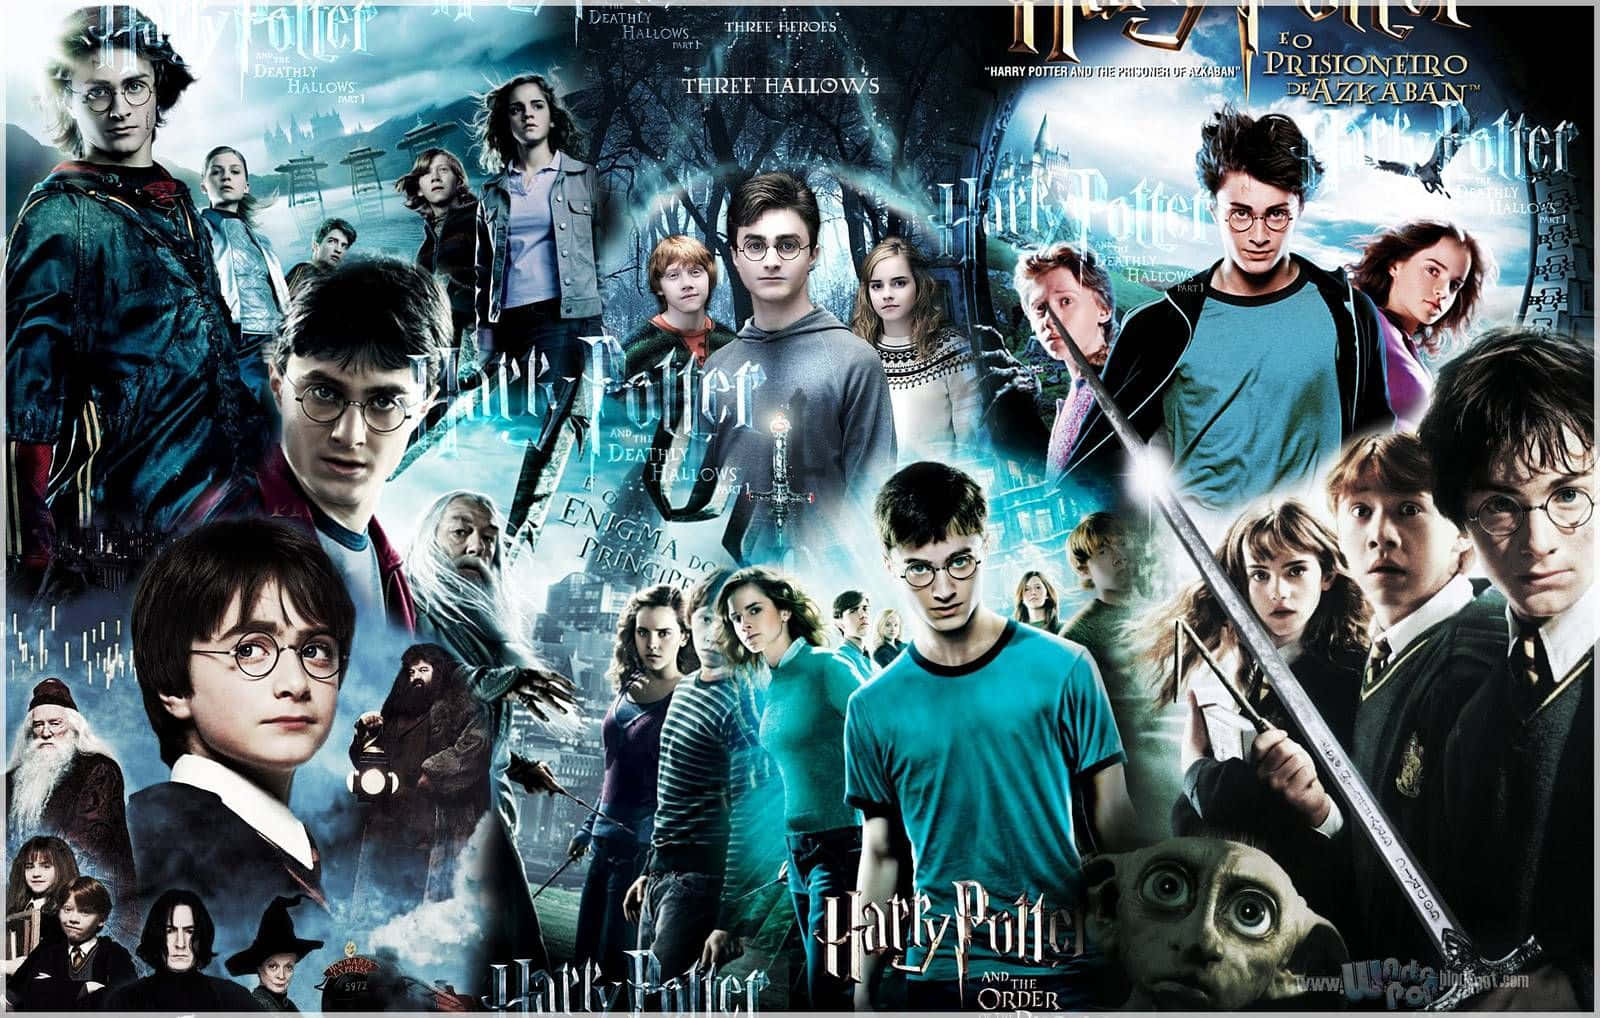 Firahalloween-andan Med Harry Potter! Wallpaper